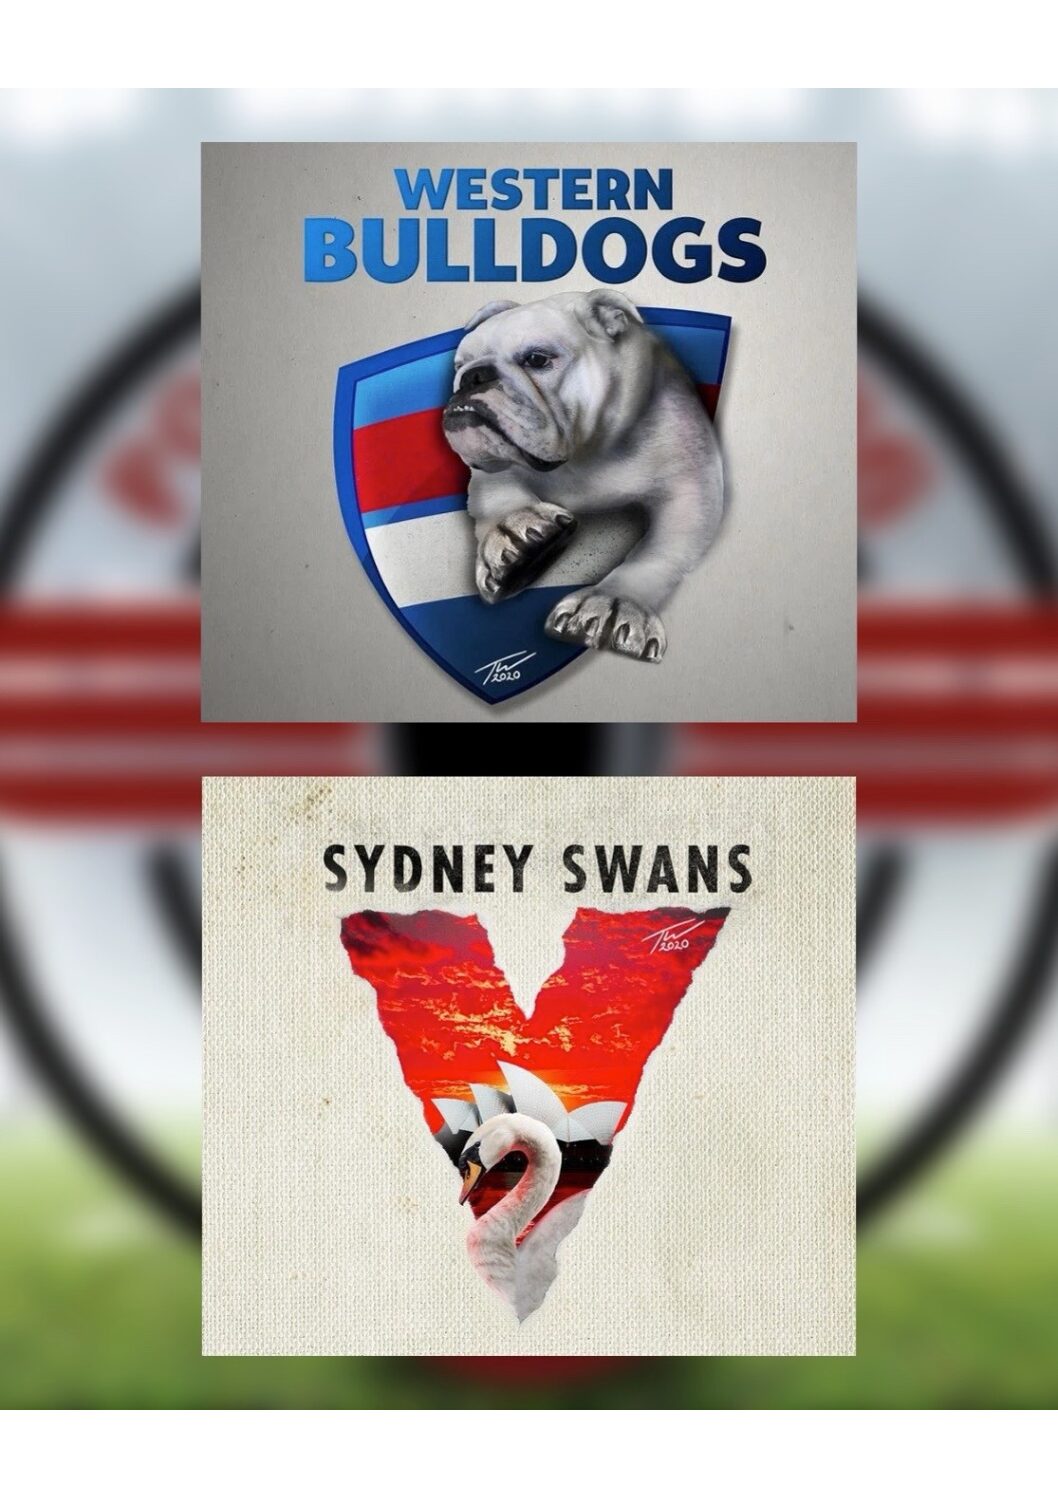 Round 3: Western Bulldogs VS Sydney Swans